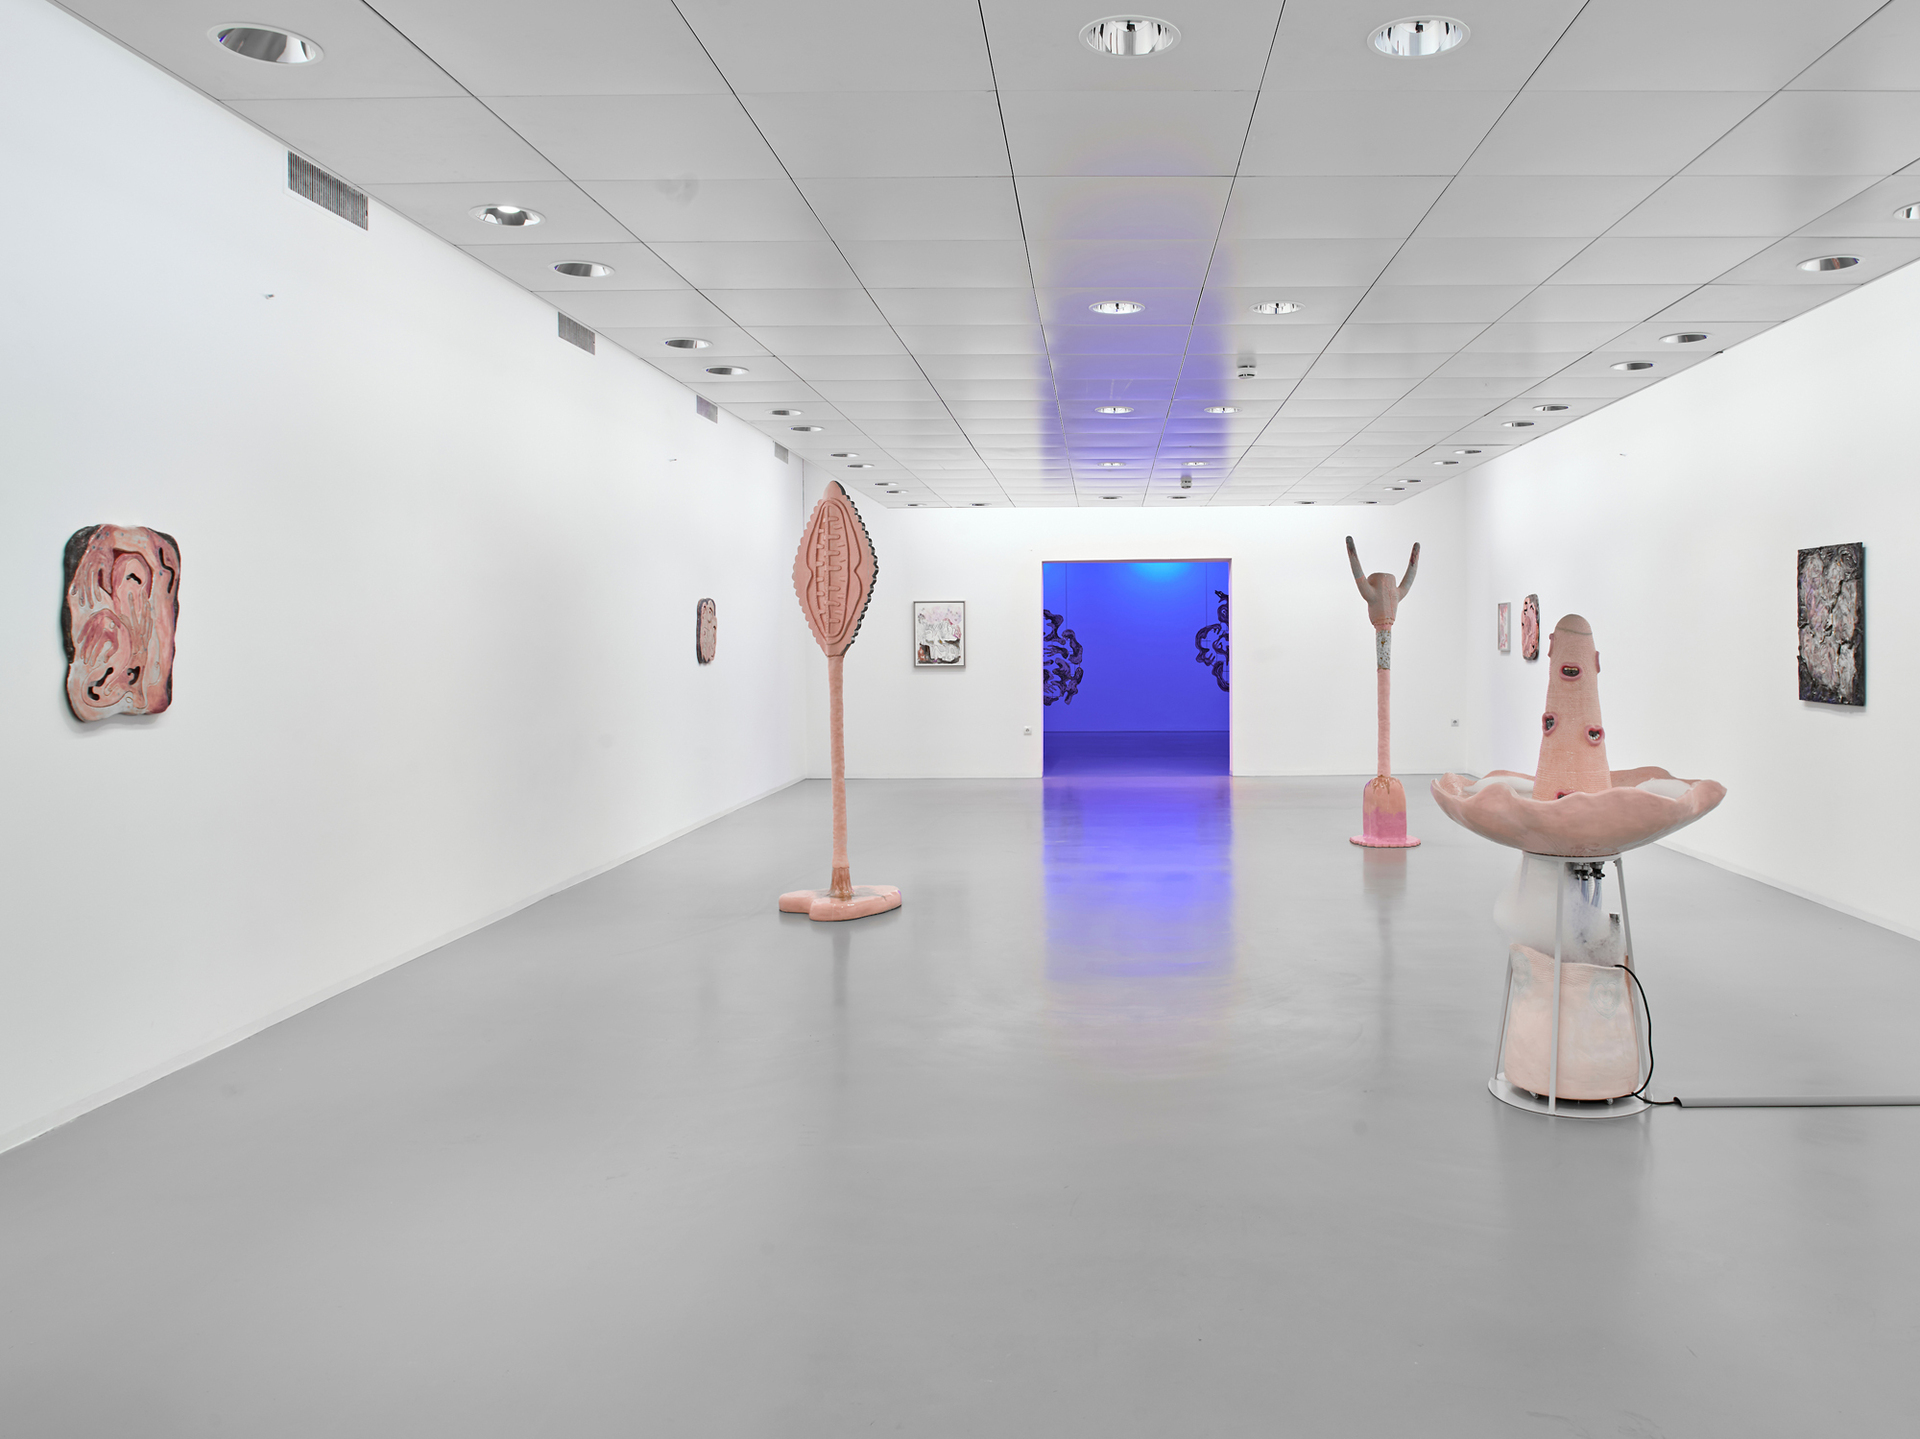 Monika Grabuschnigg, Violent delights, installation view, large show room of DOCK 20.